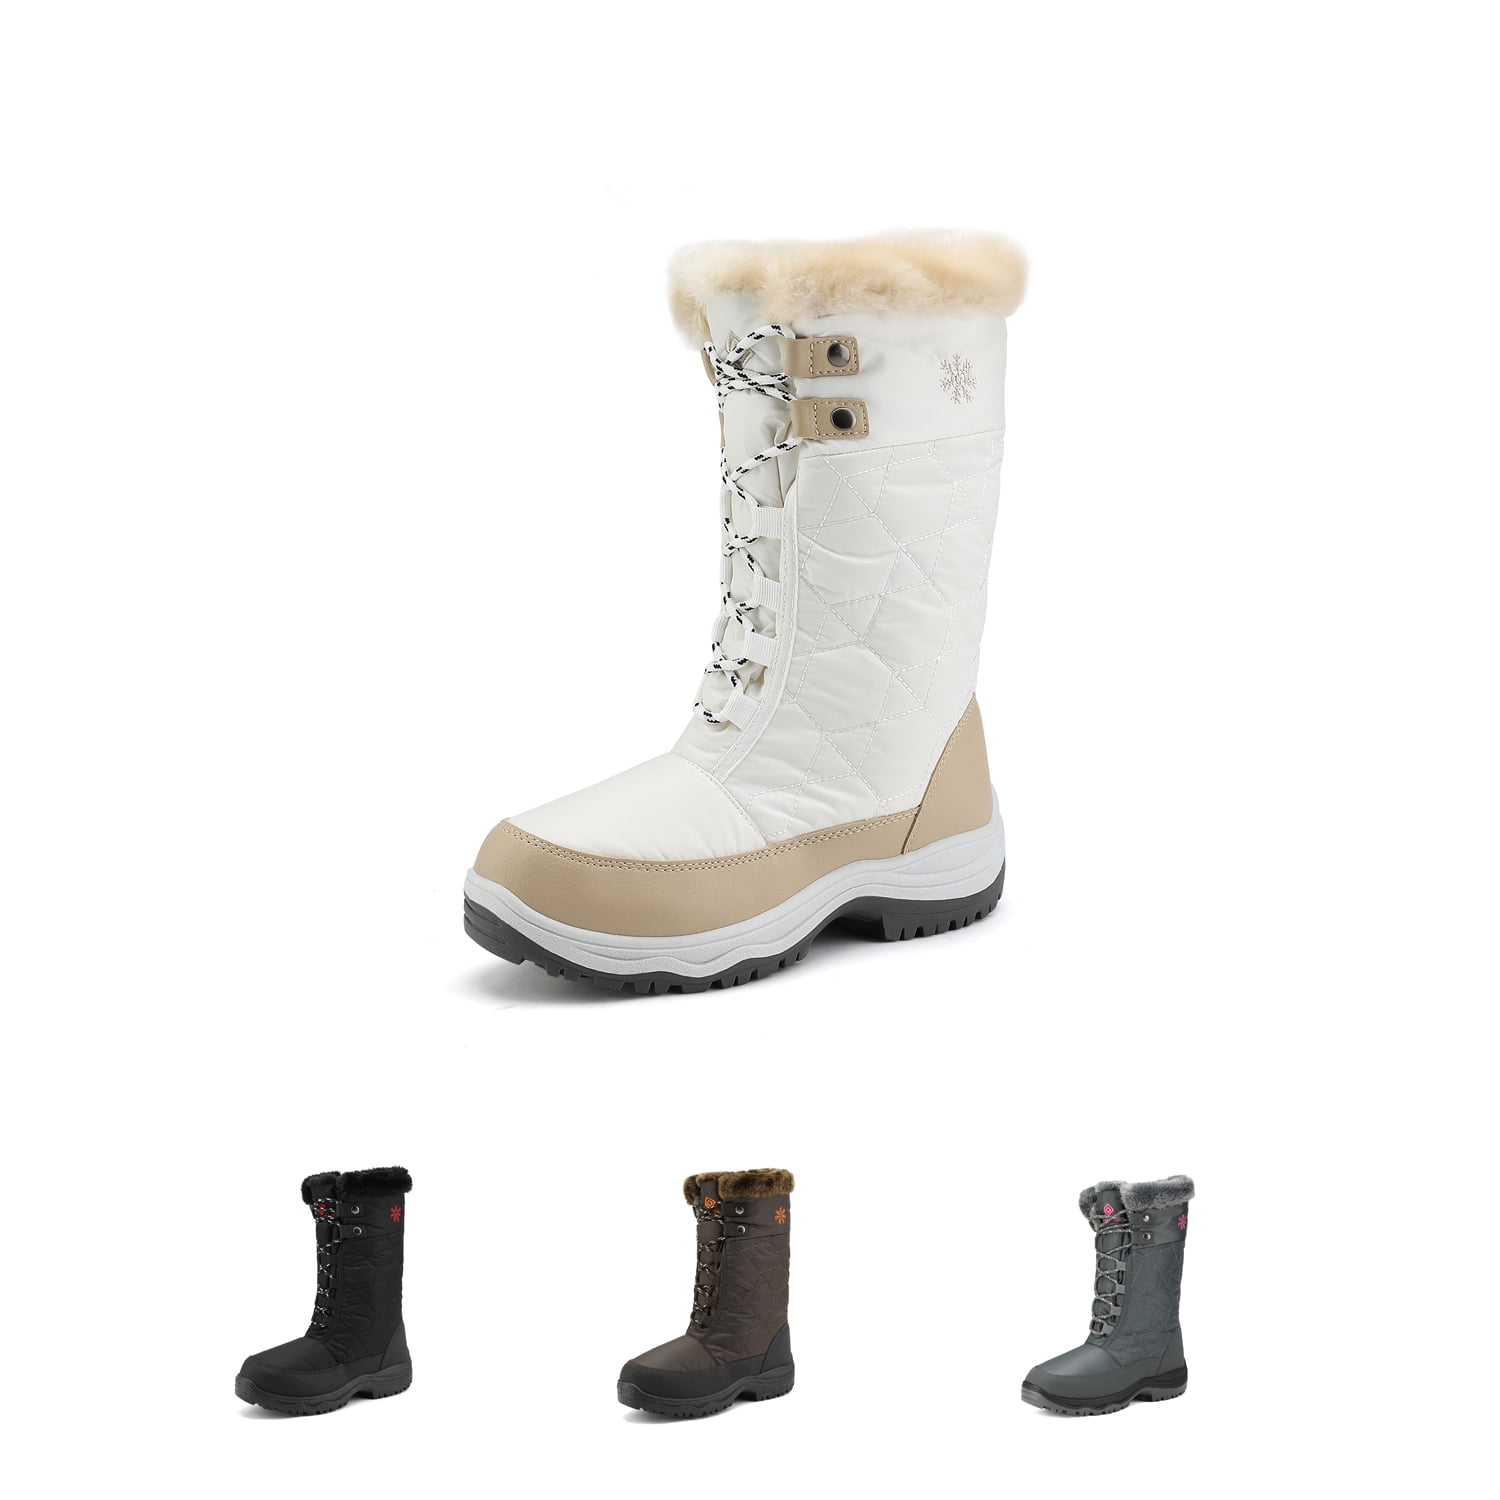 Men's Snow Outdoor Ankle Boots Winter Warm Snow Boots Faux Fur Lining Shoes Plus